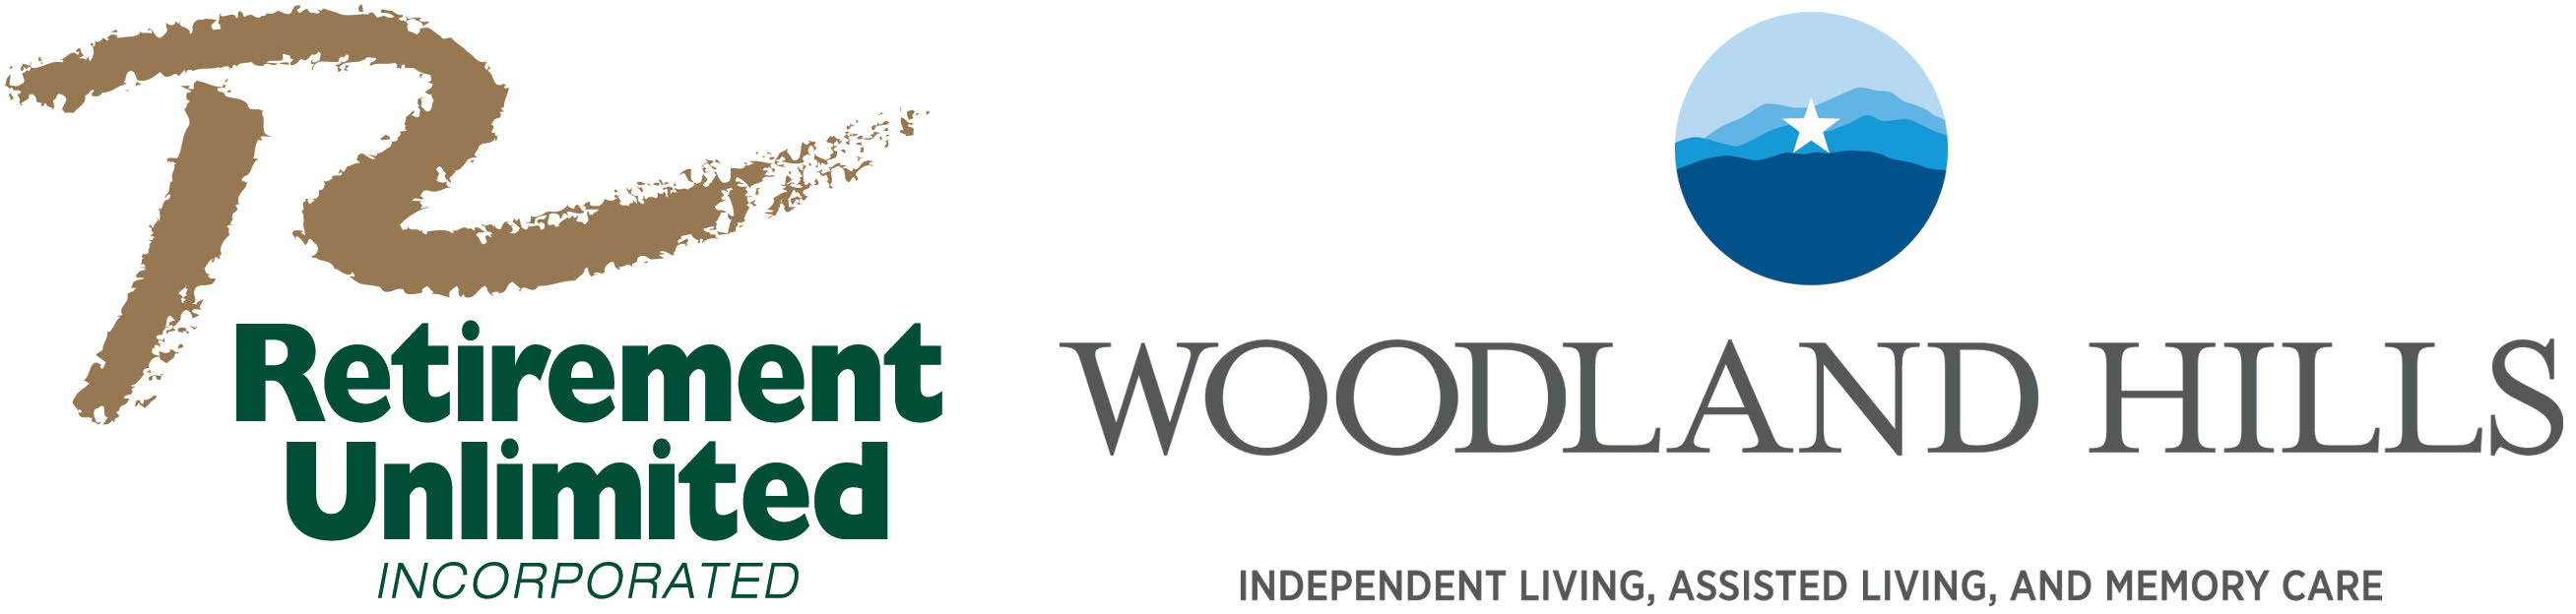 Woodland Hills/ Retirement Unlimited